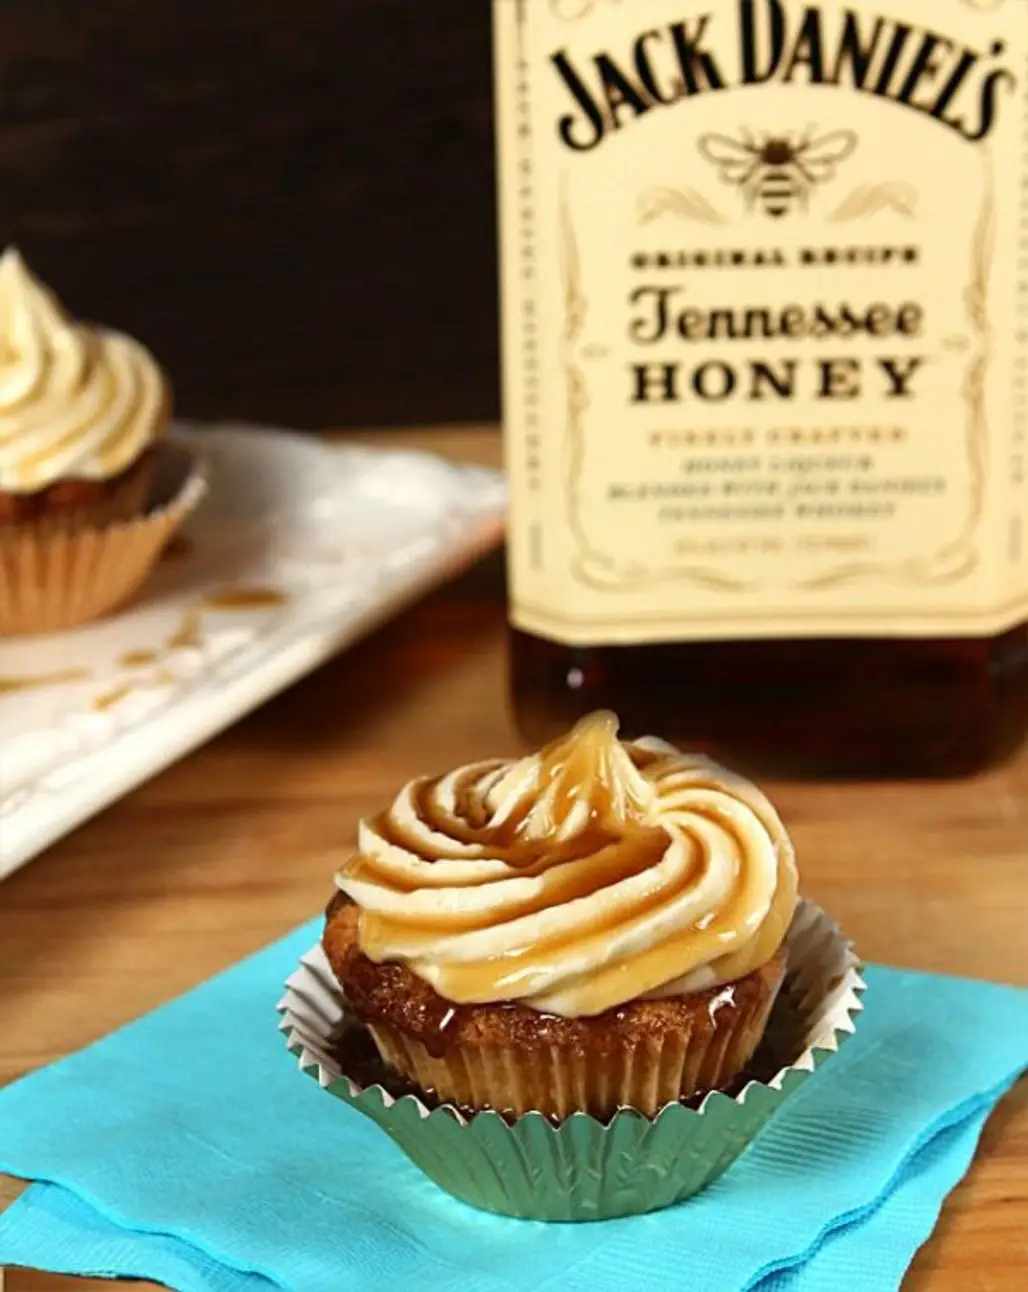 Jack Daniels Honey Whiskey Cupcakes